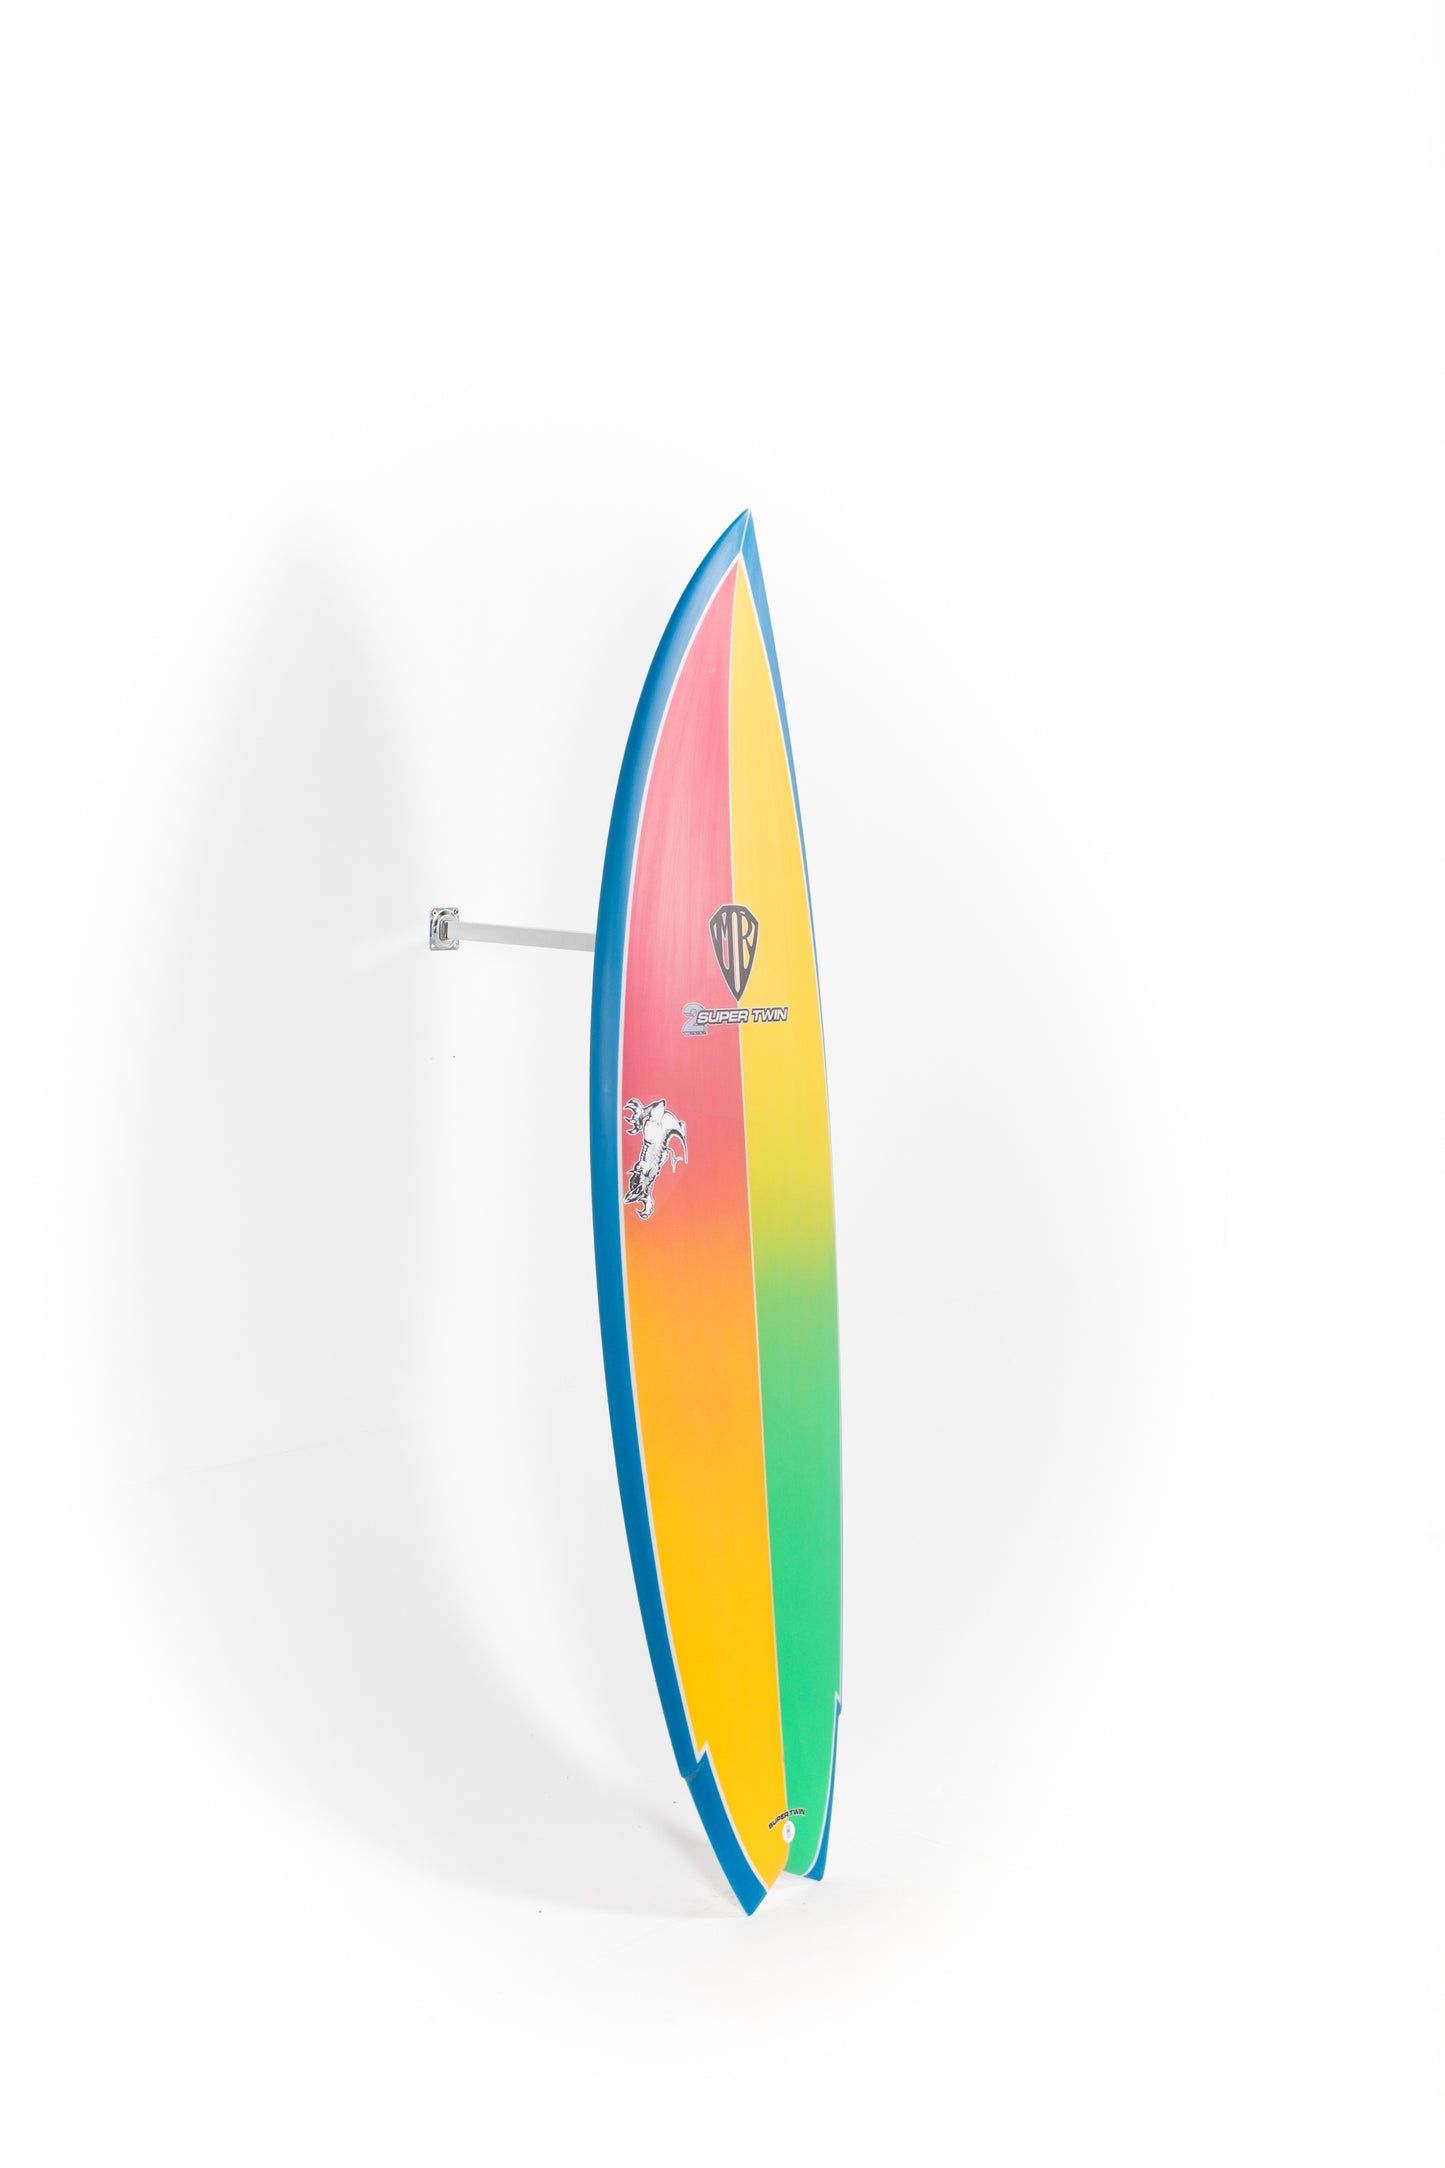 
                  
                    Pukas Surf Shop - Mark Richards - SUPER TWIN - 6'0" x 20 x 2 1/2 - SUPERTWIN60
                  
                